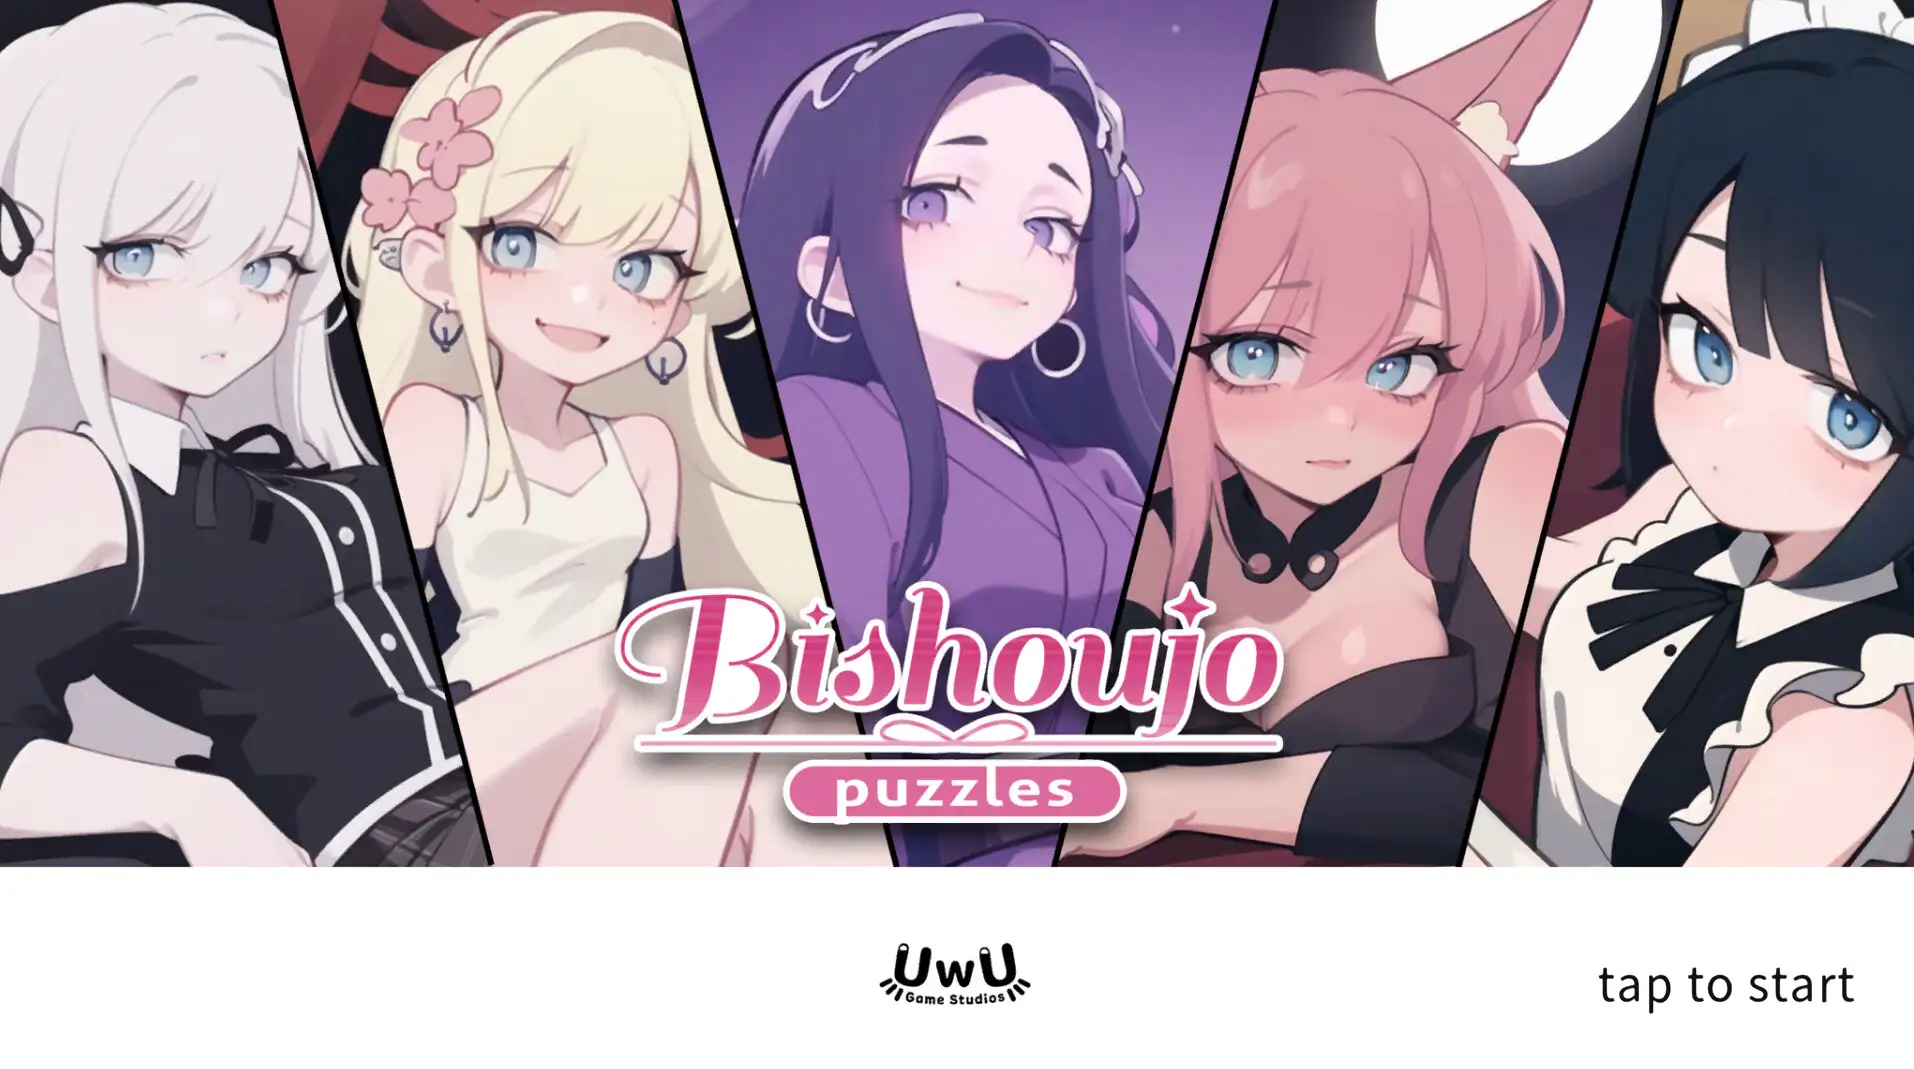 [uwu]美少女パズル Bishoujo puzzles